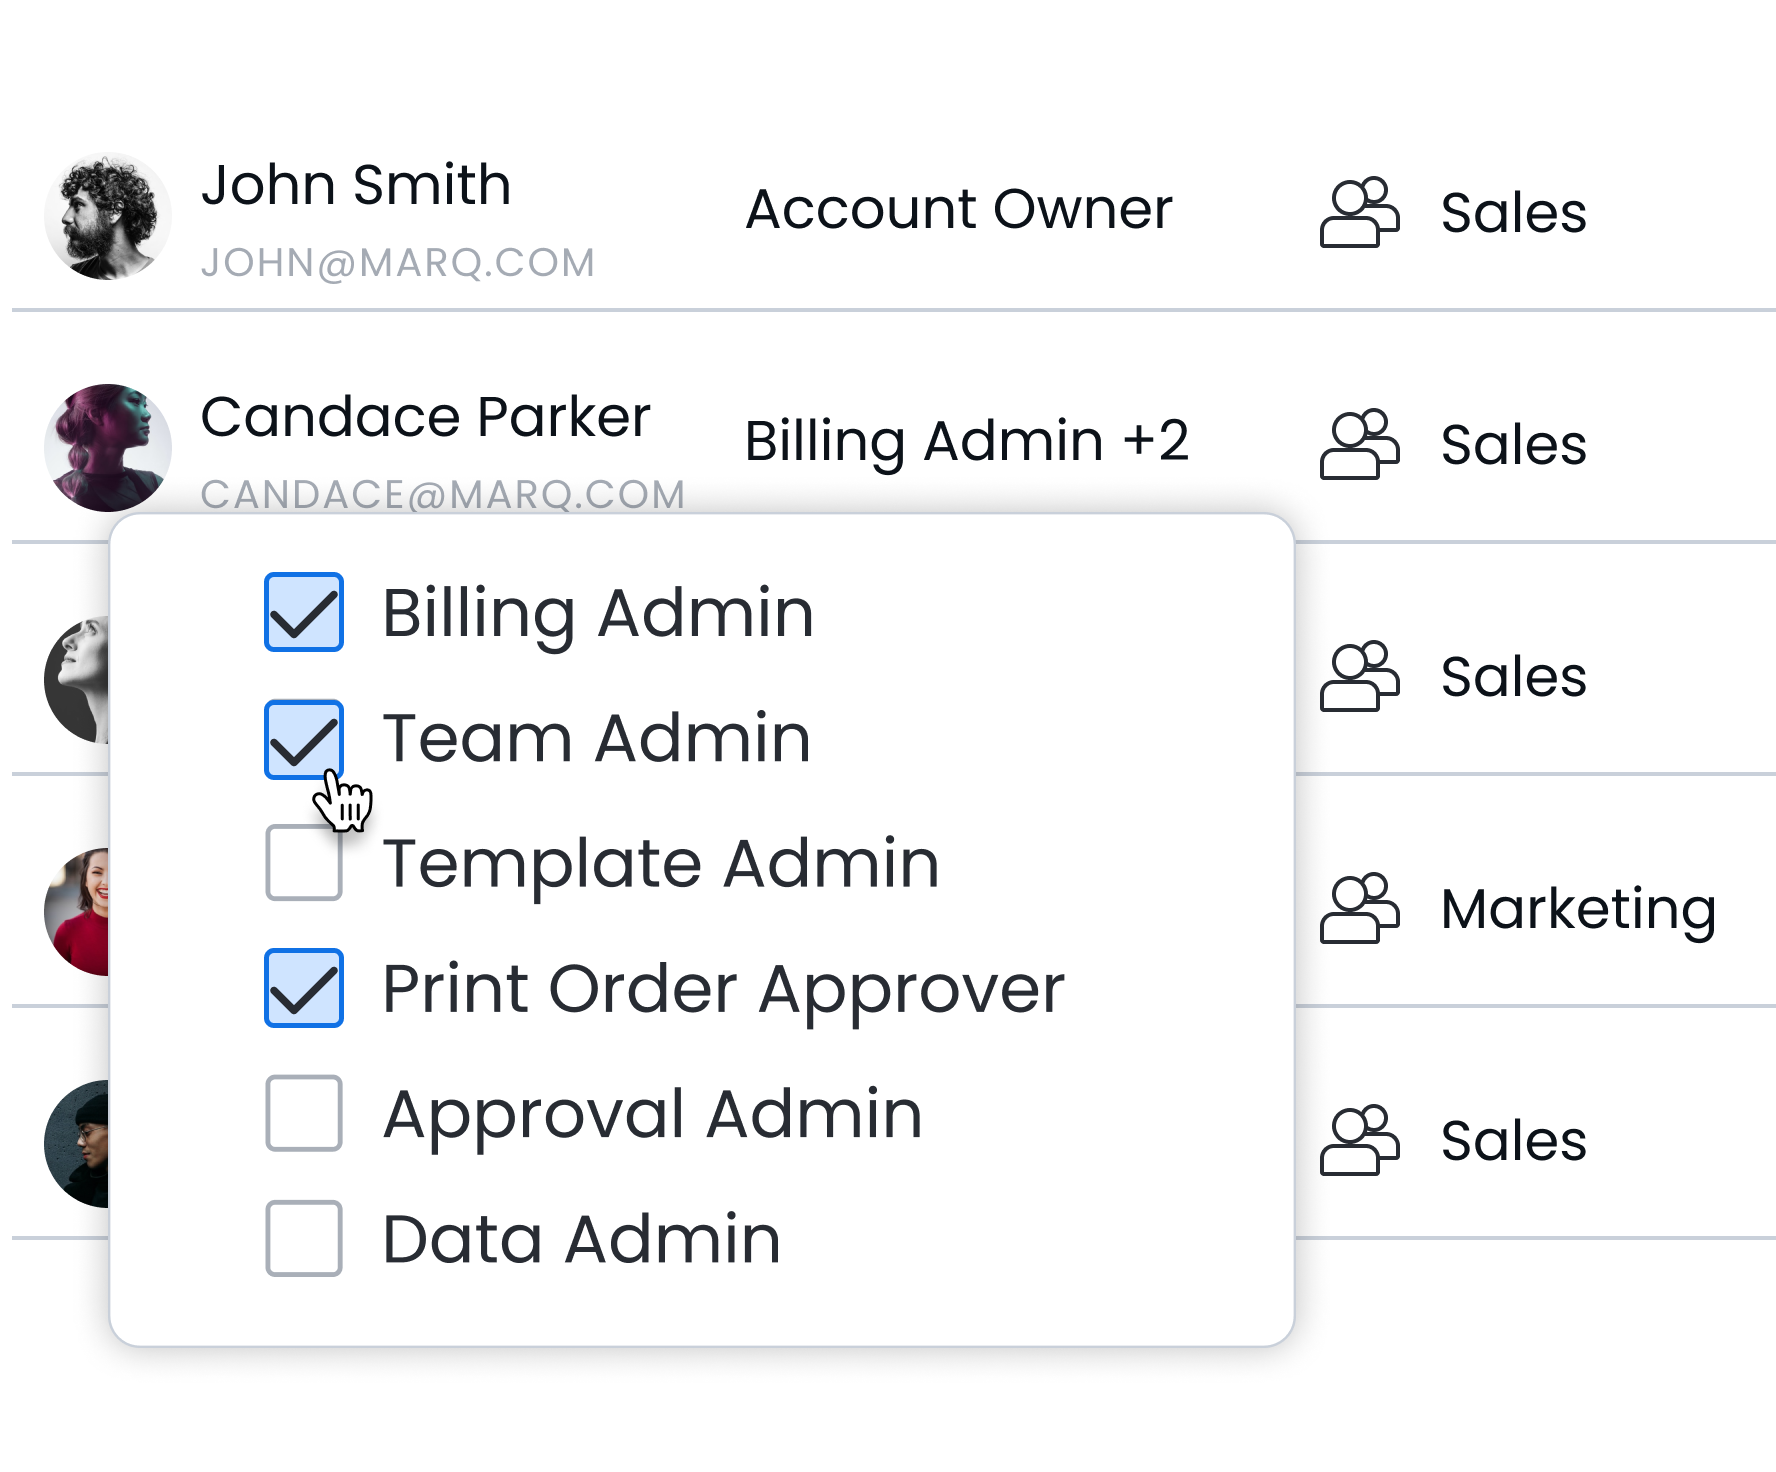 Custom_roles_&_collaboration_settings